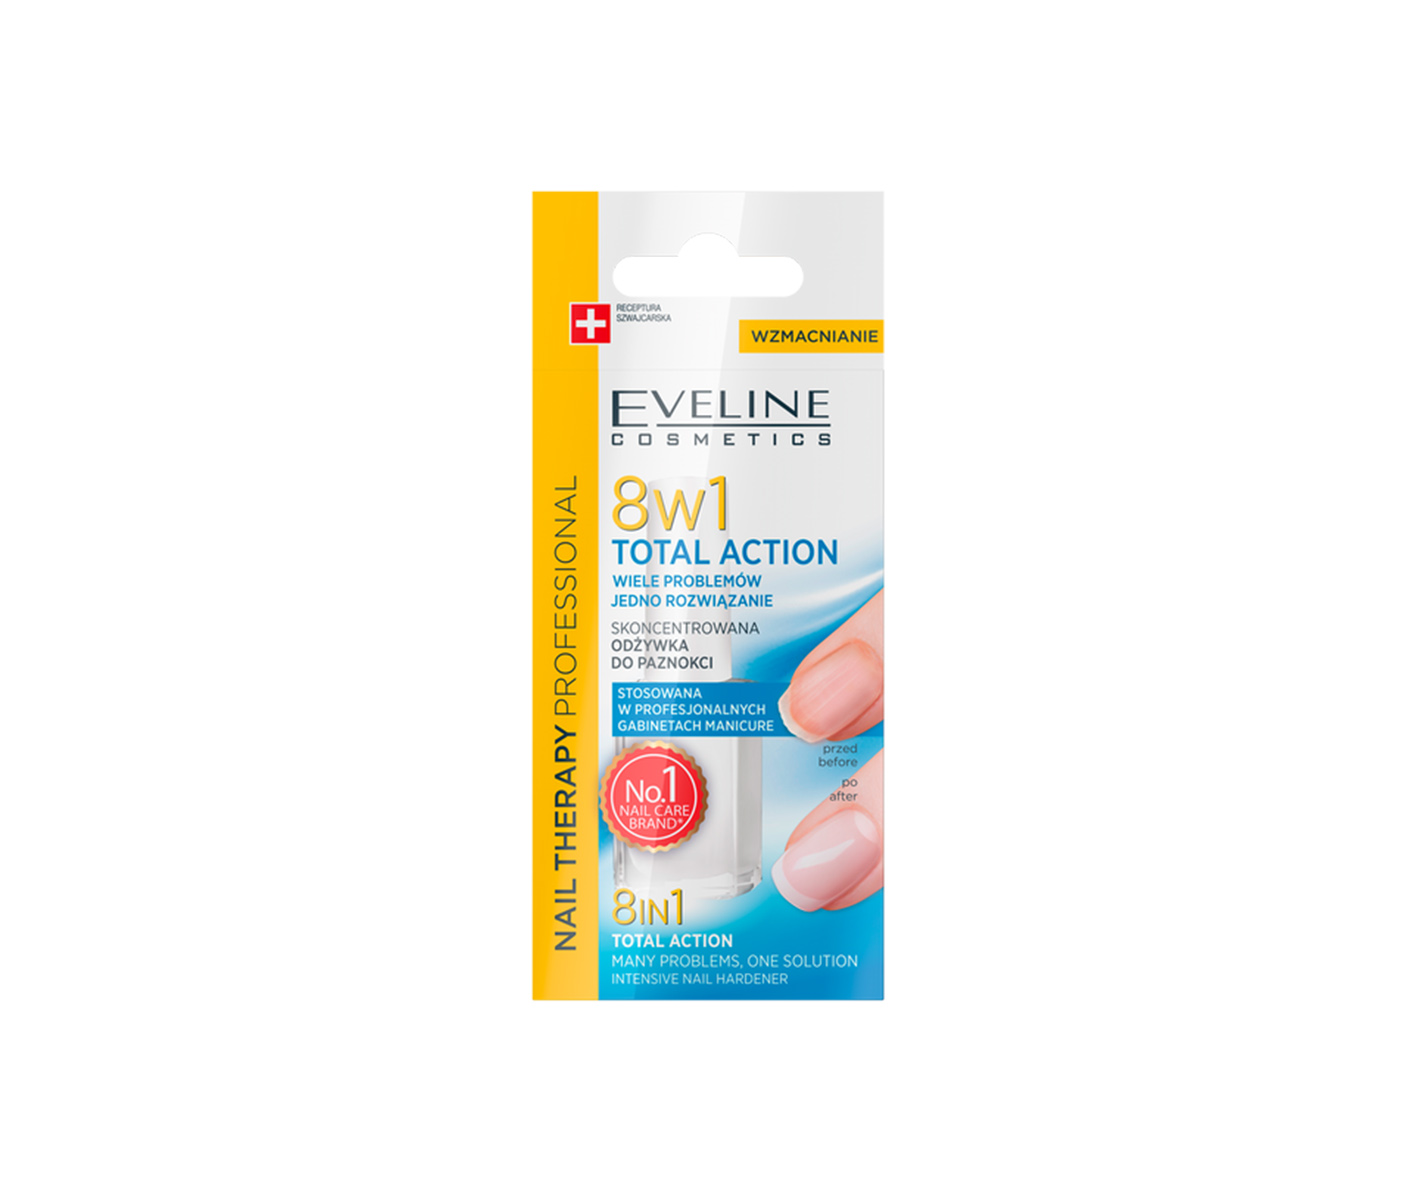  Eveline, Nail Therapy Professional 8w1 Total Action, odżywka do paznokci